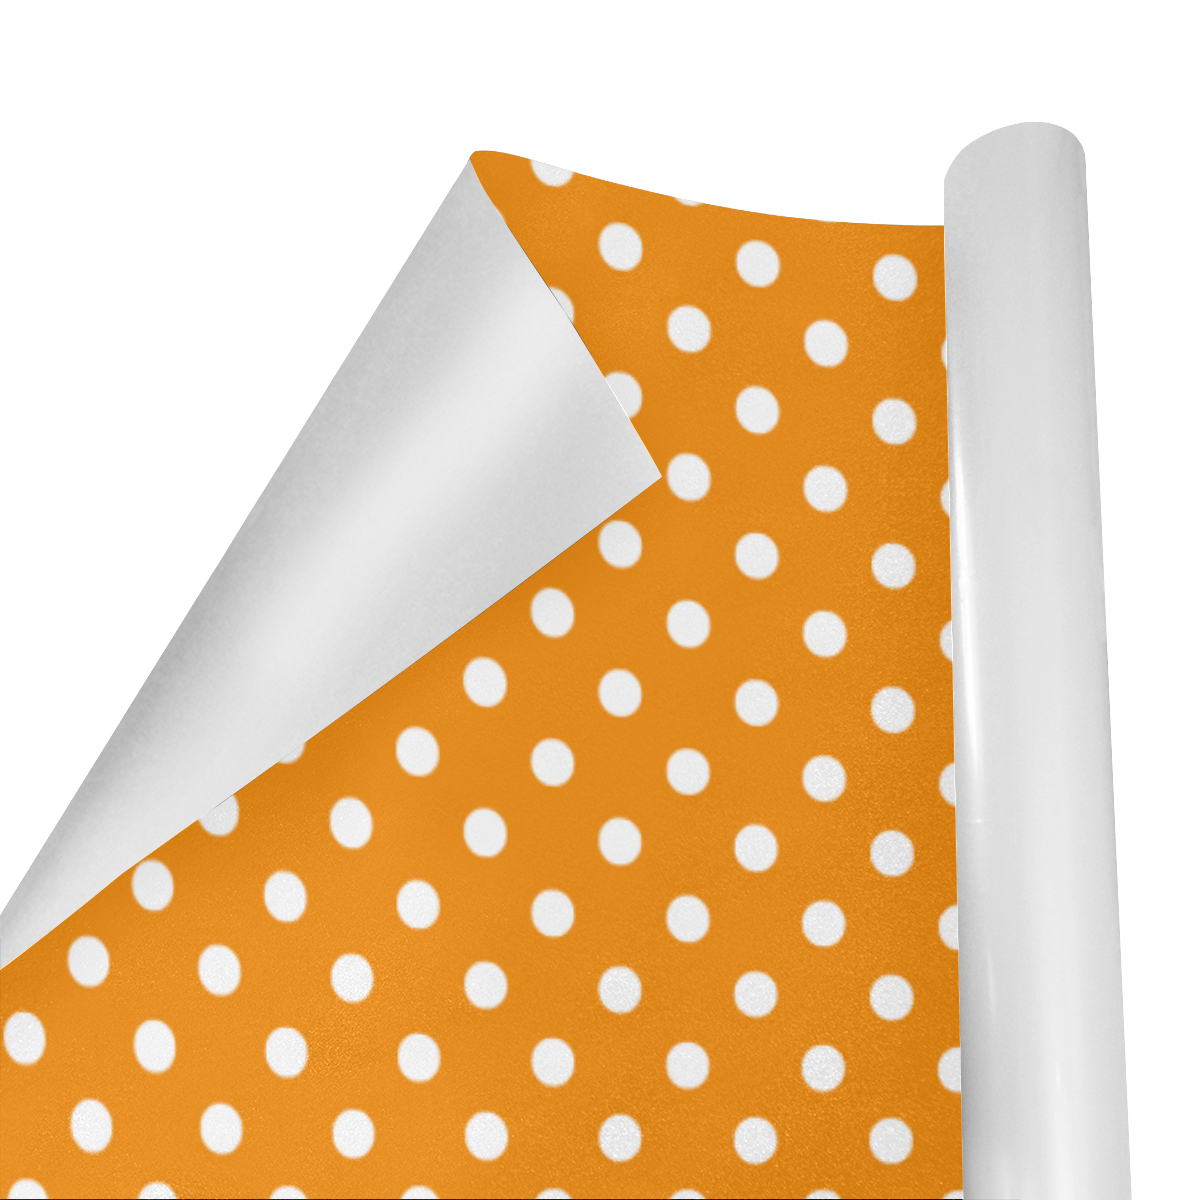 White Polka Dots on Tangerine Orange Gift Wrapping Paper 58"x 23" (5 Rolls)